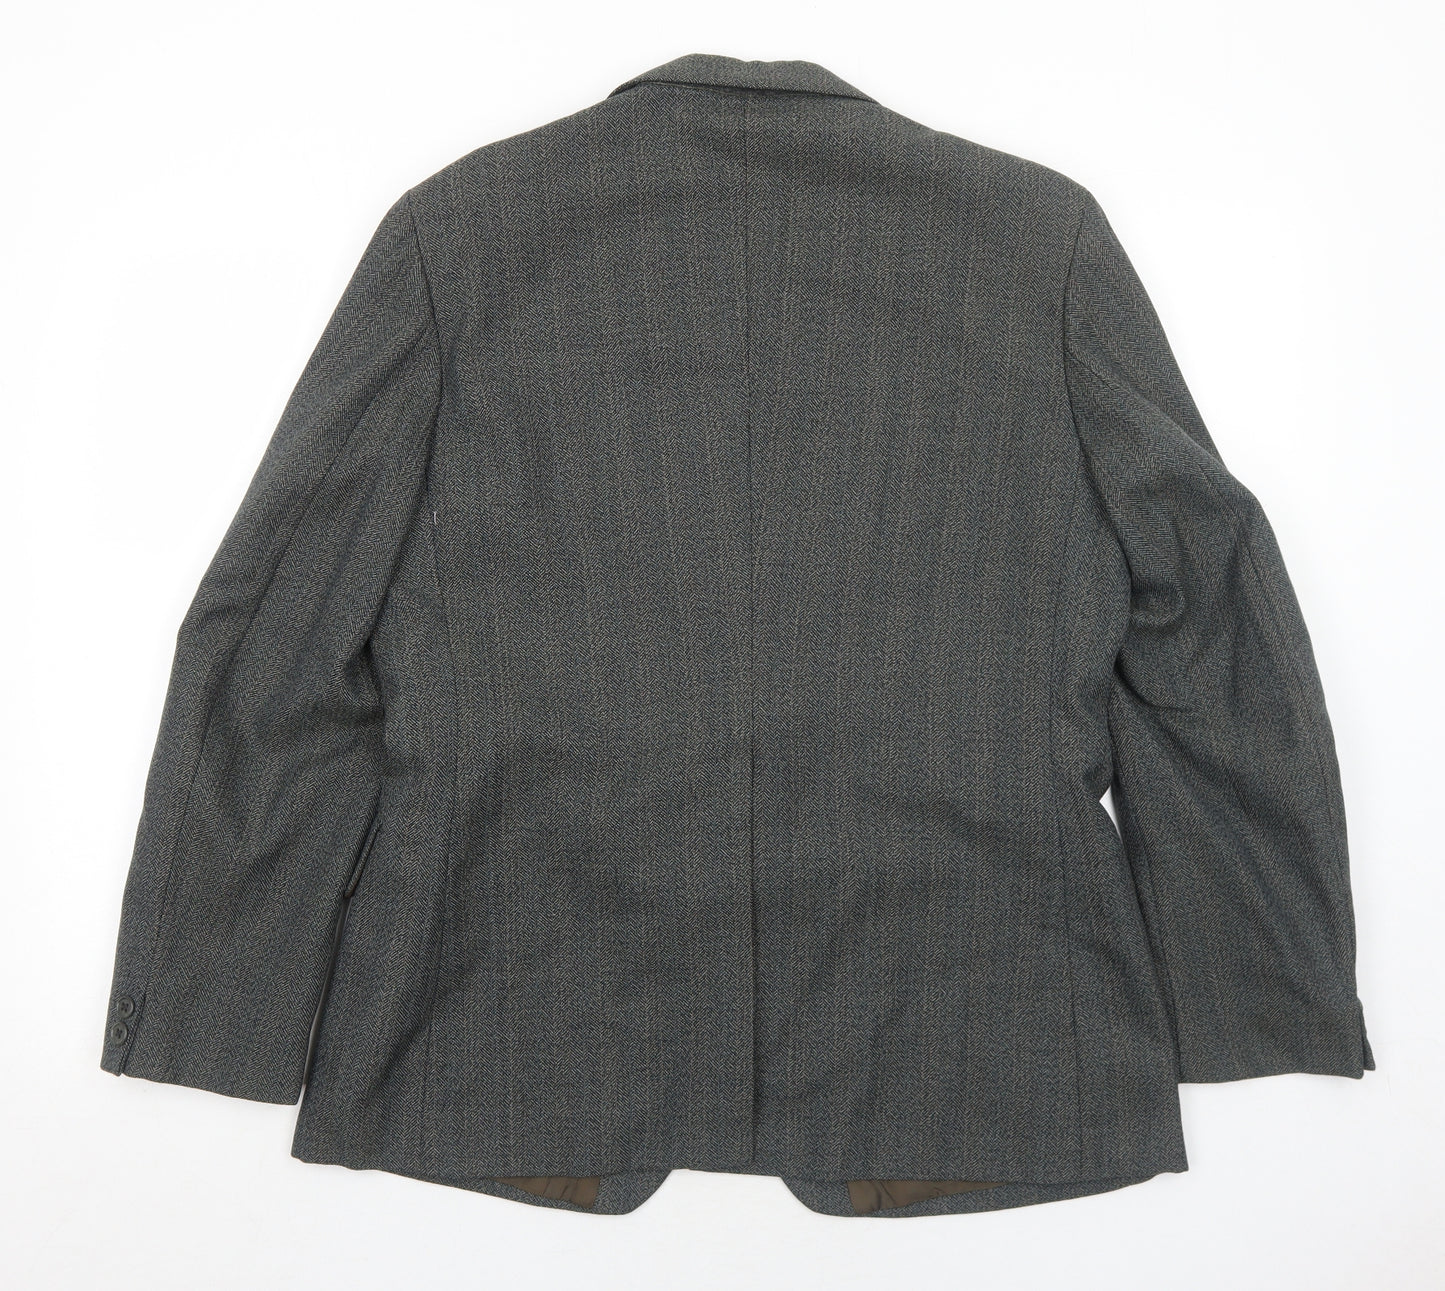 Guards Mens Grey Striped Polyester Jacket Suit Jacket Size 40 Regular